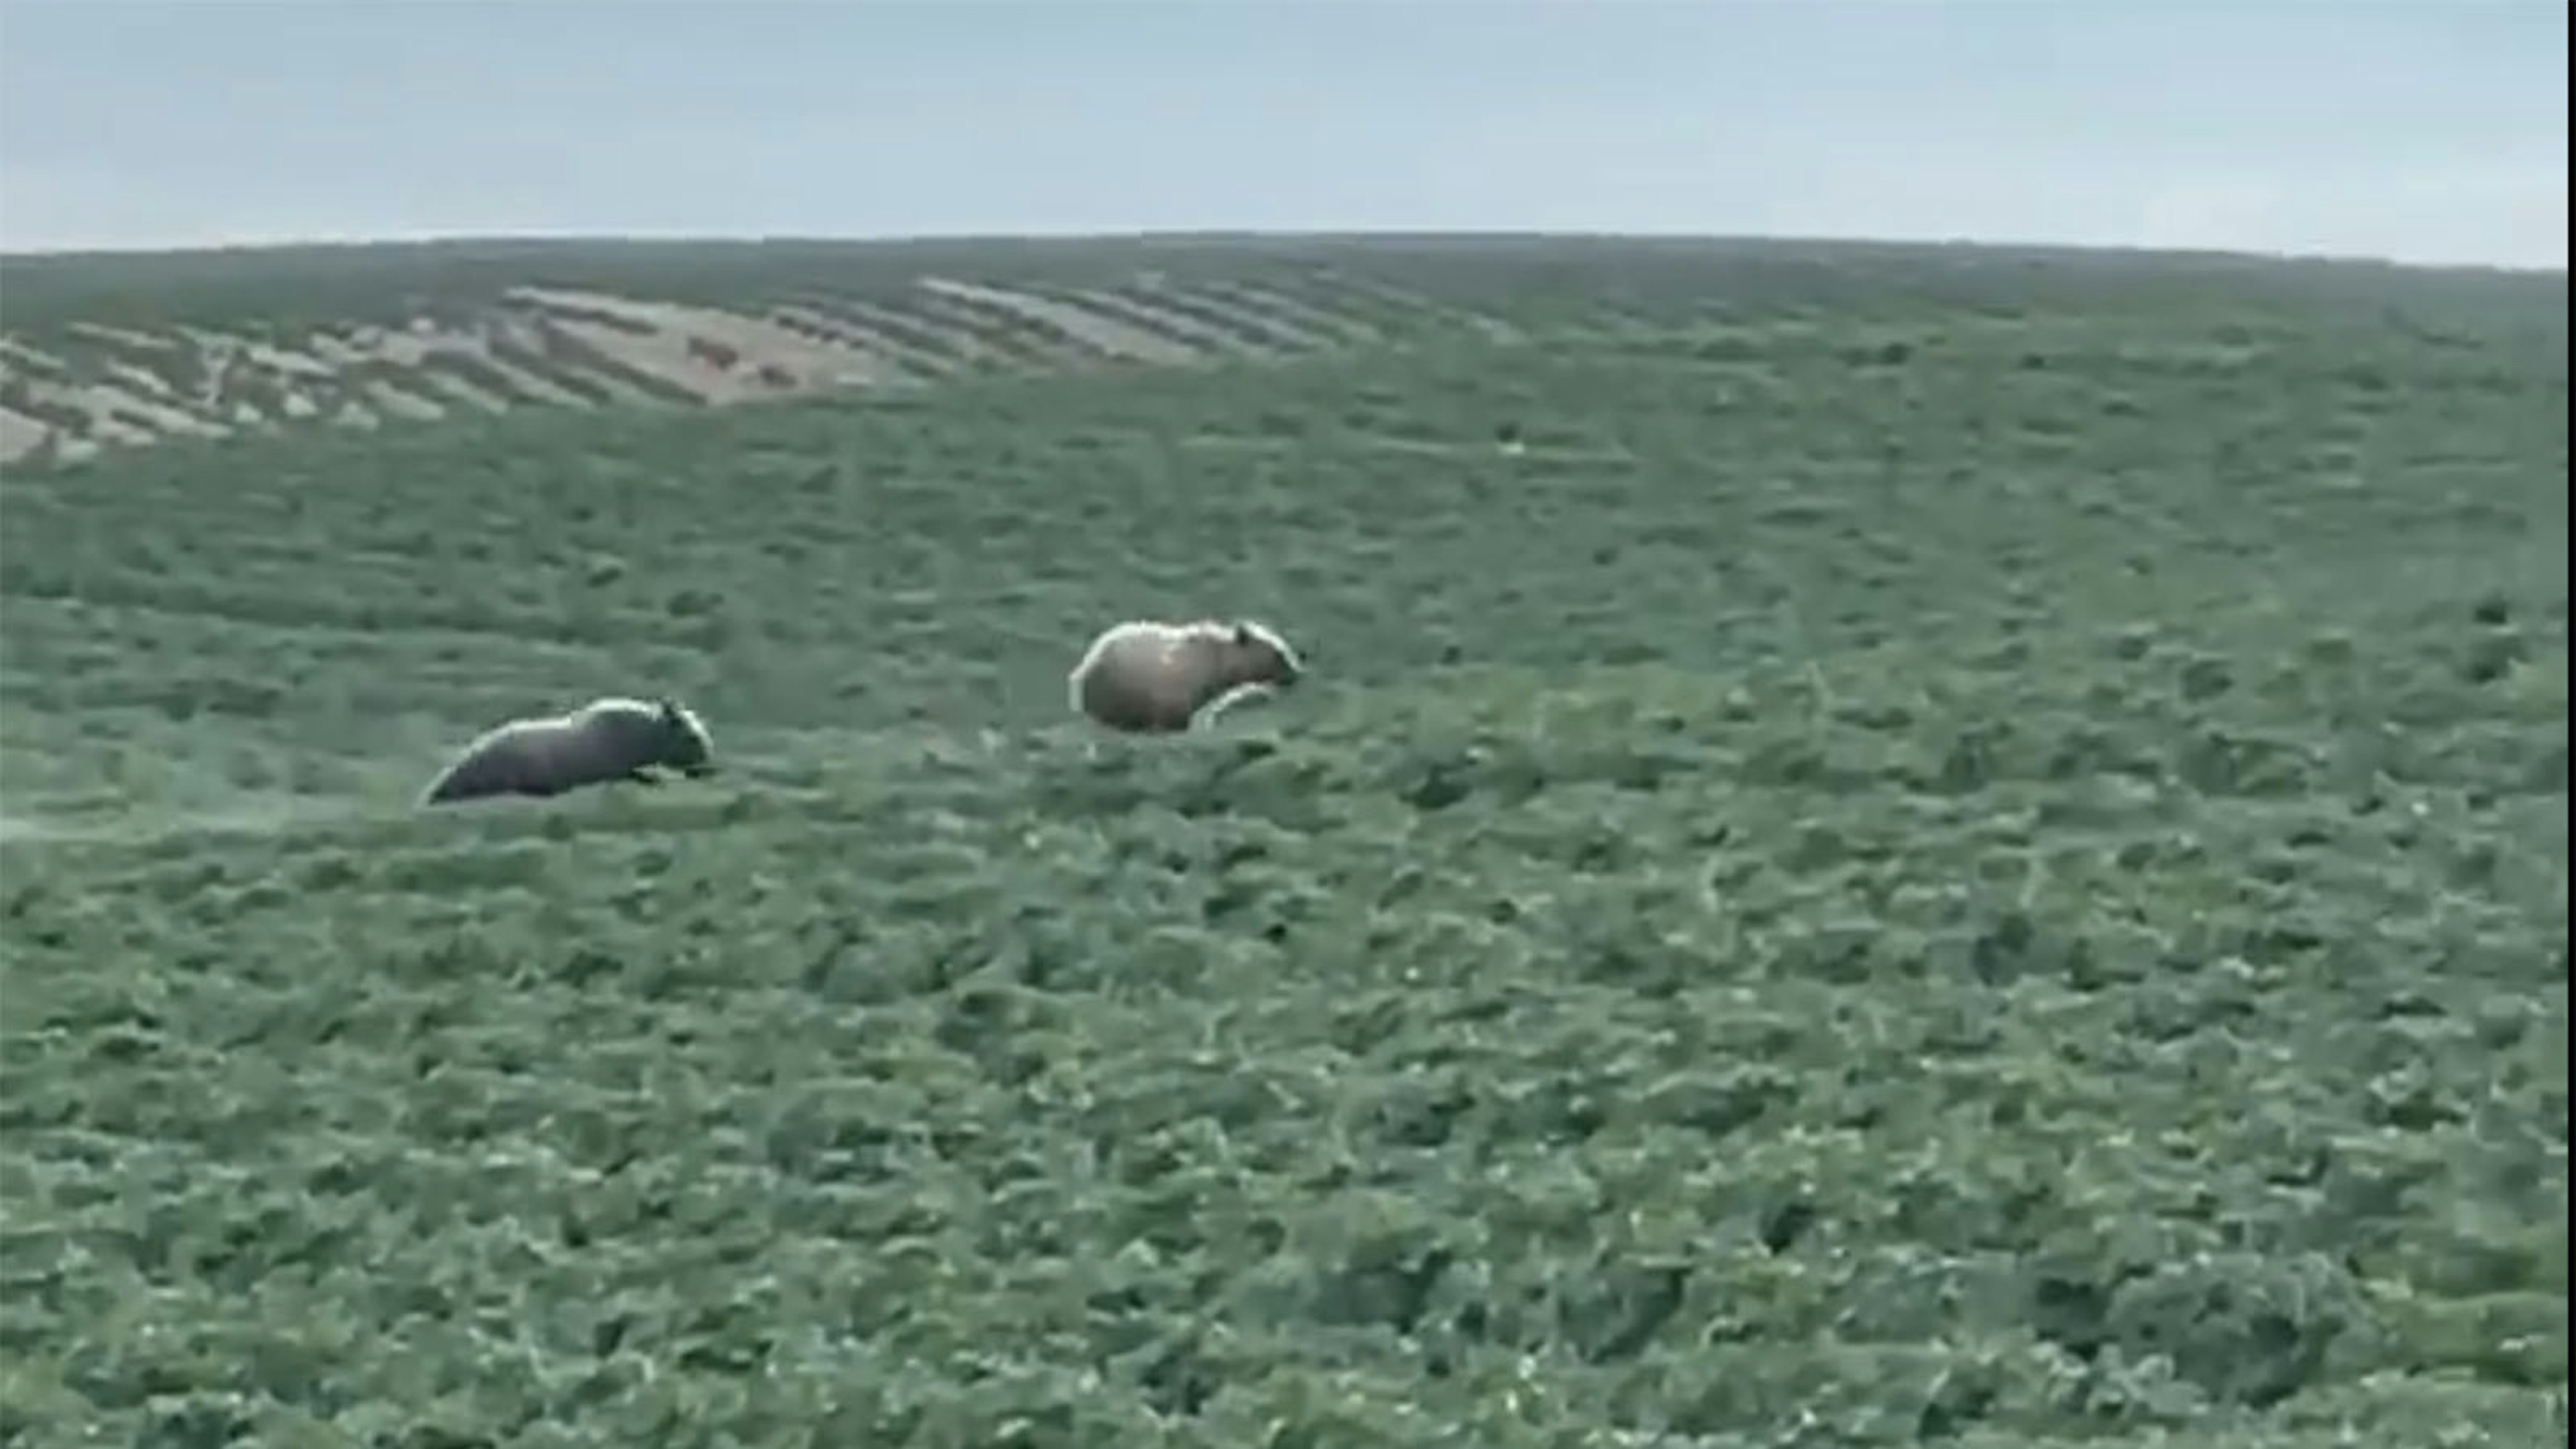 Farmer Videos Grizzlies Frolicking On His Potato Farm